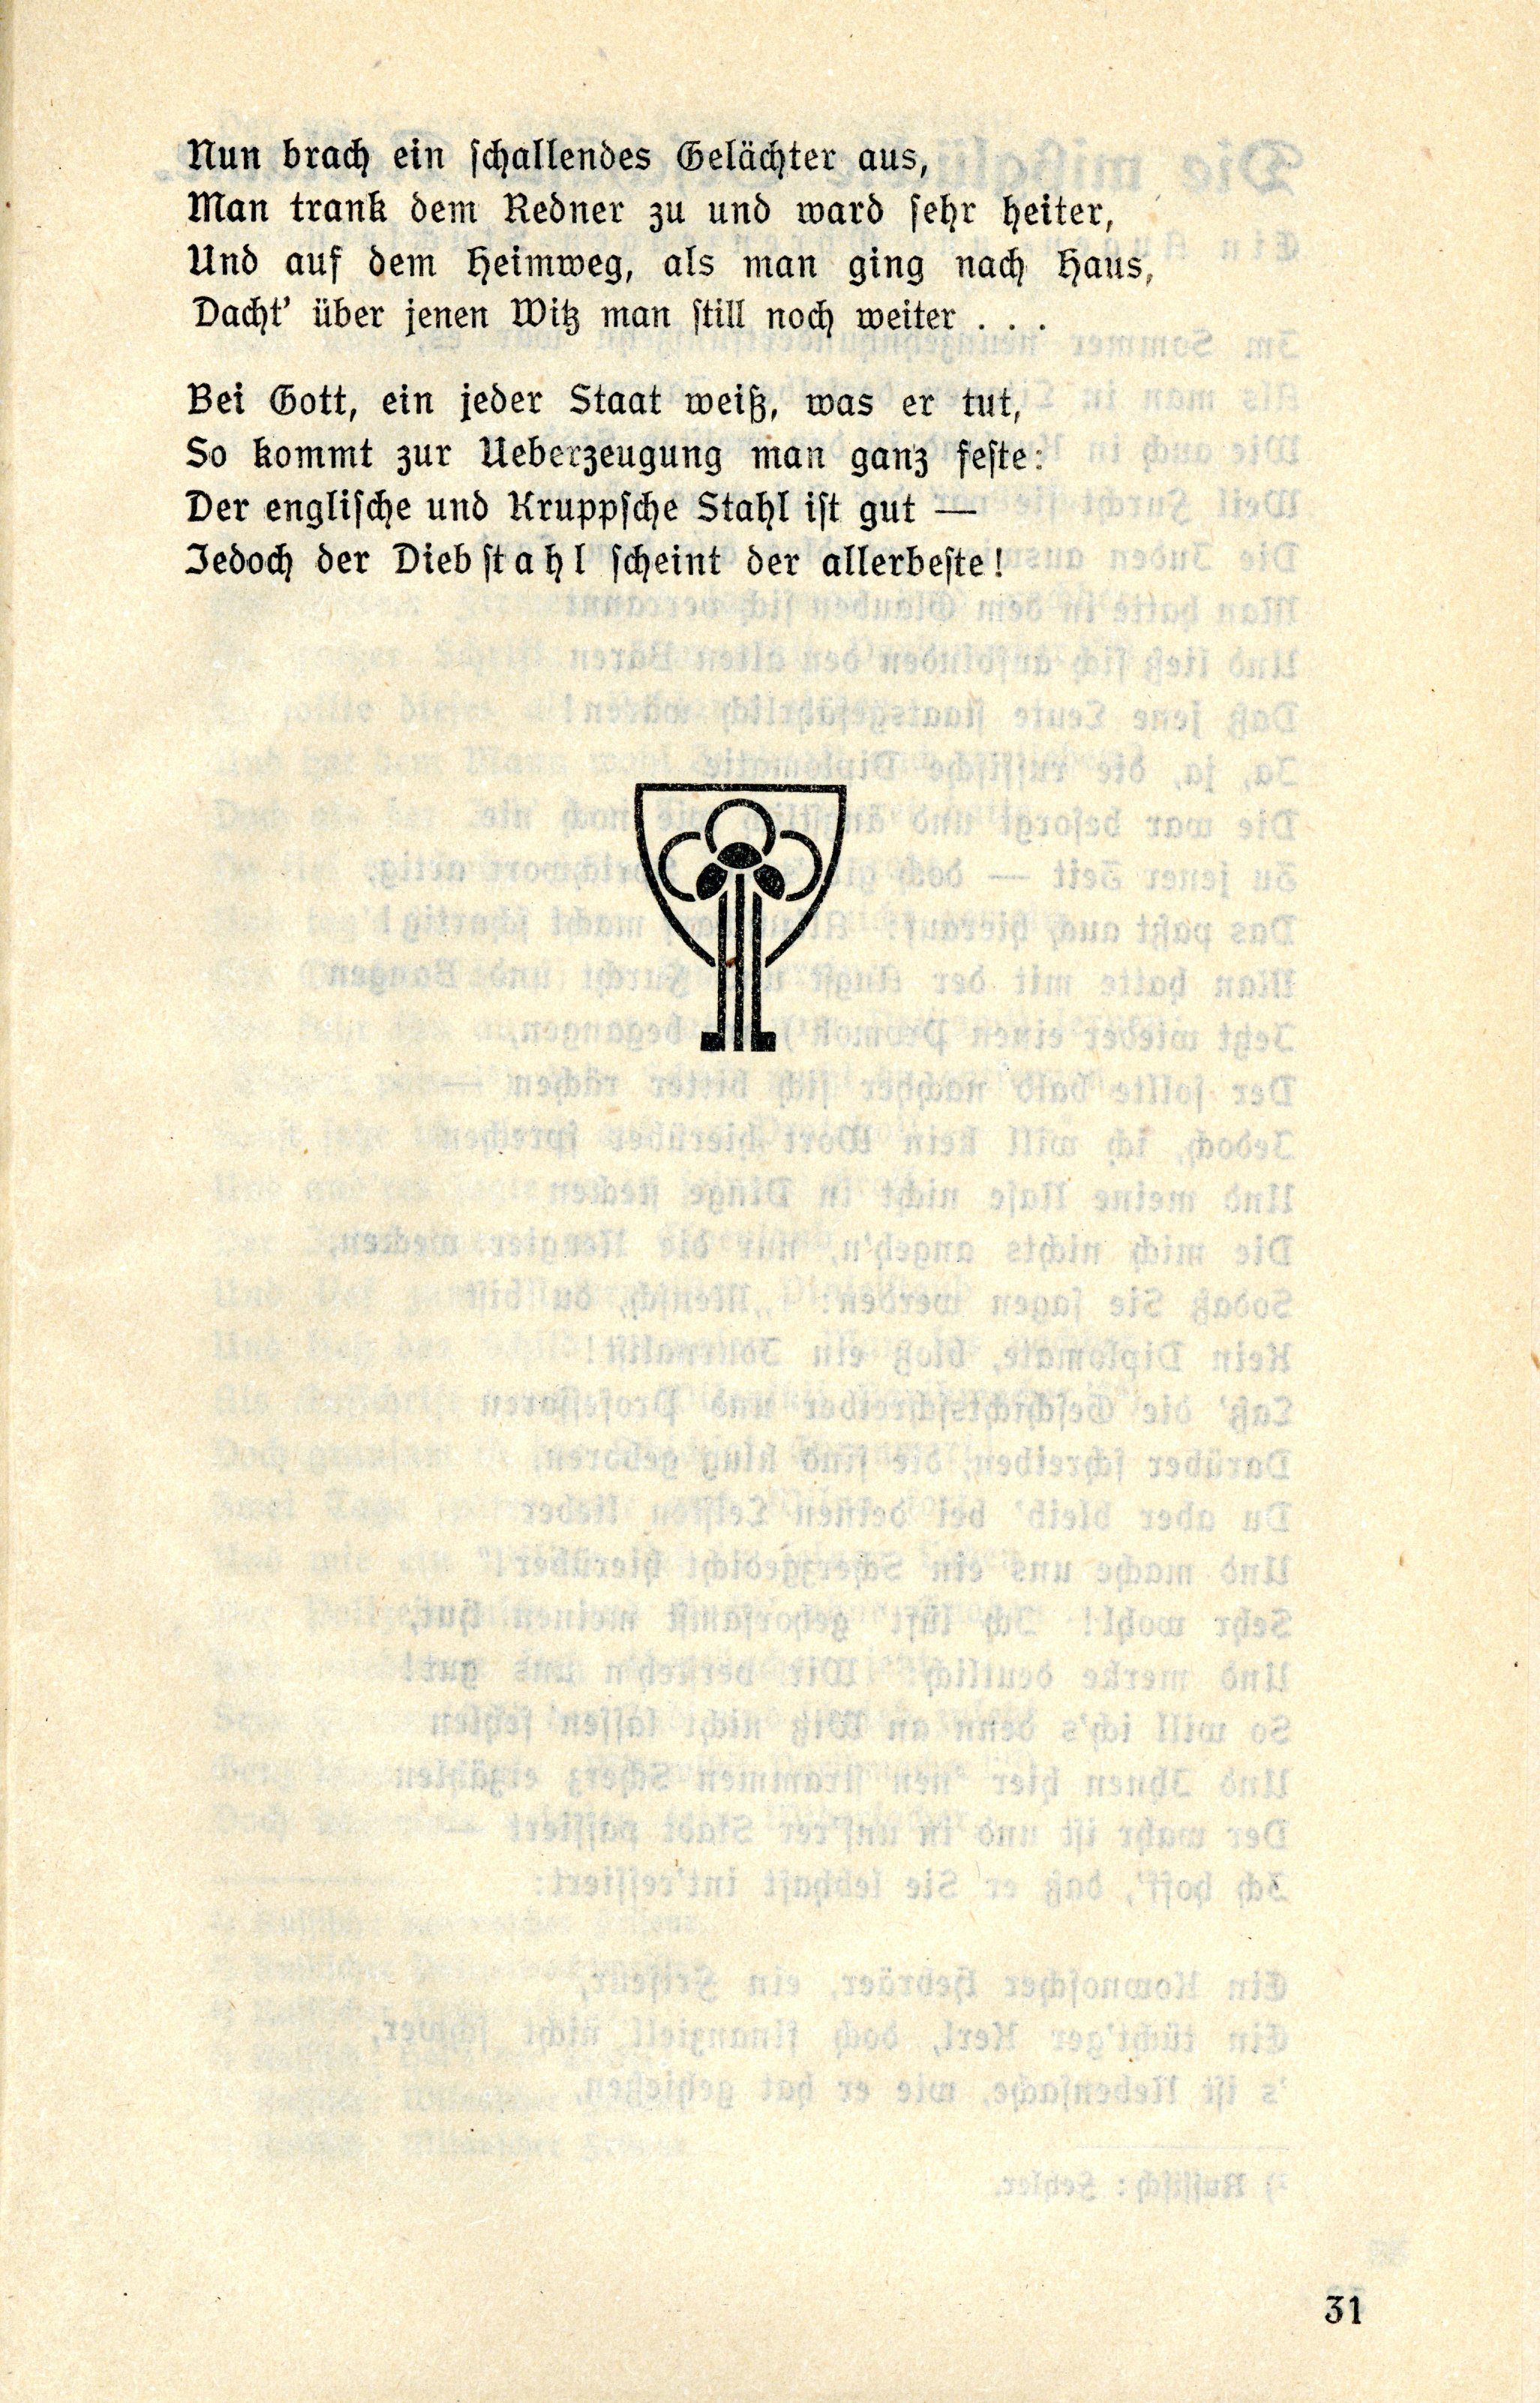 Der Balte im Maulkorb (1917) | 32. (31) Main body of text